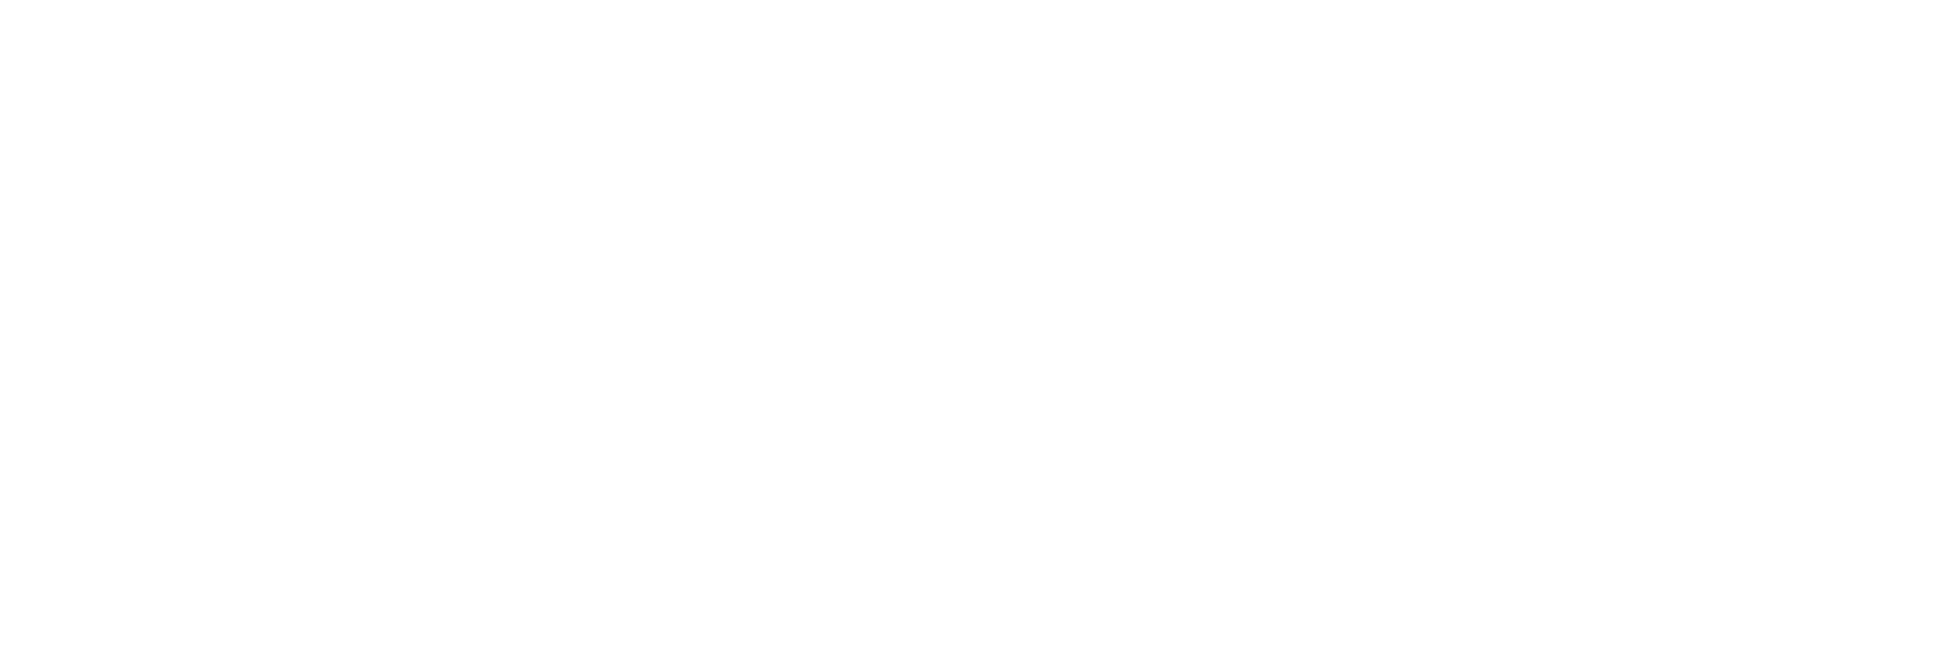 AniCura Högsby Djurklinik logo